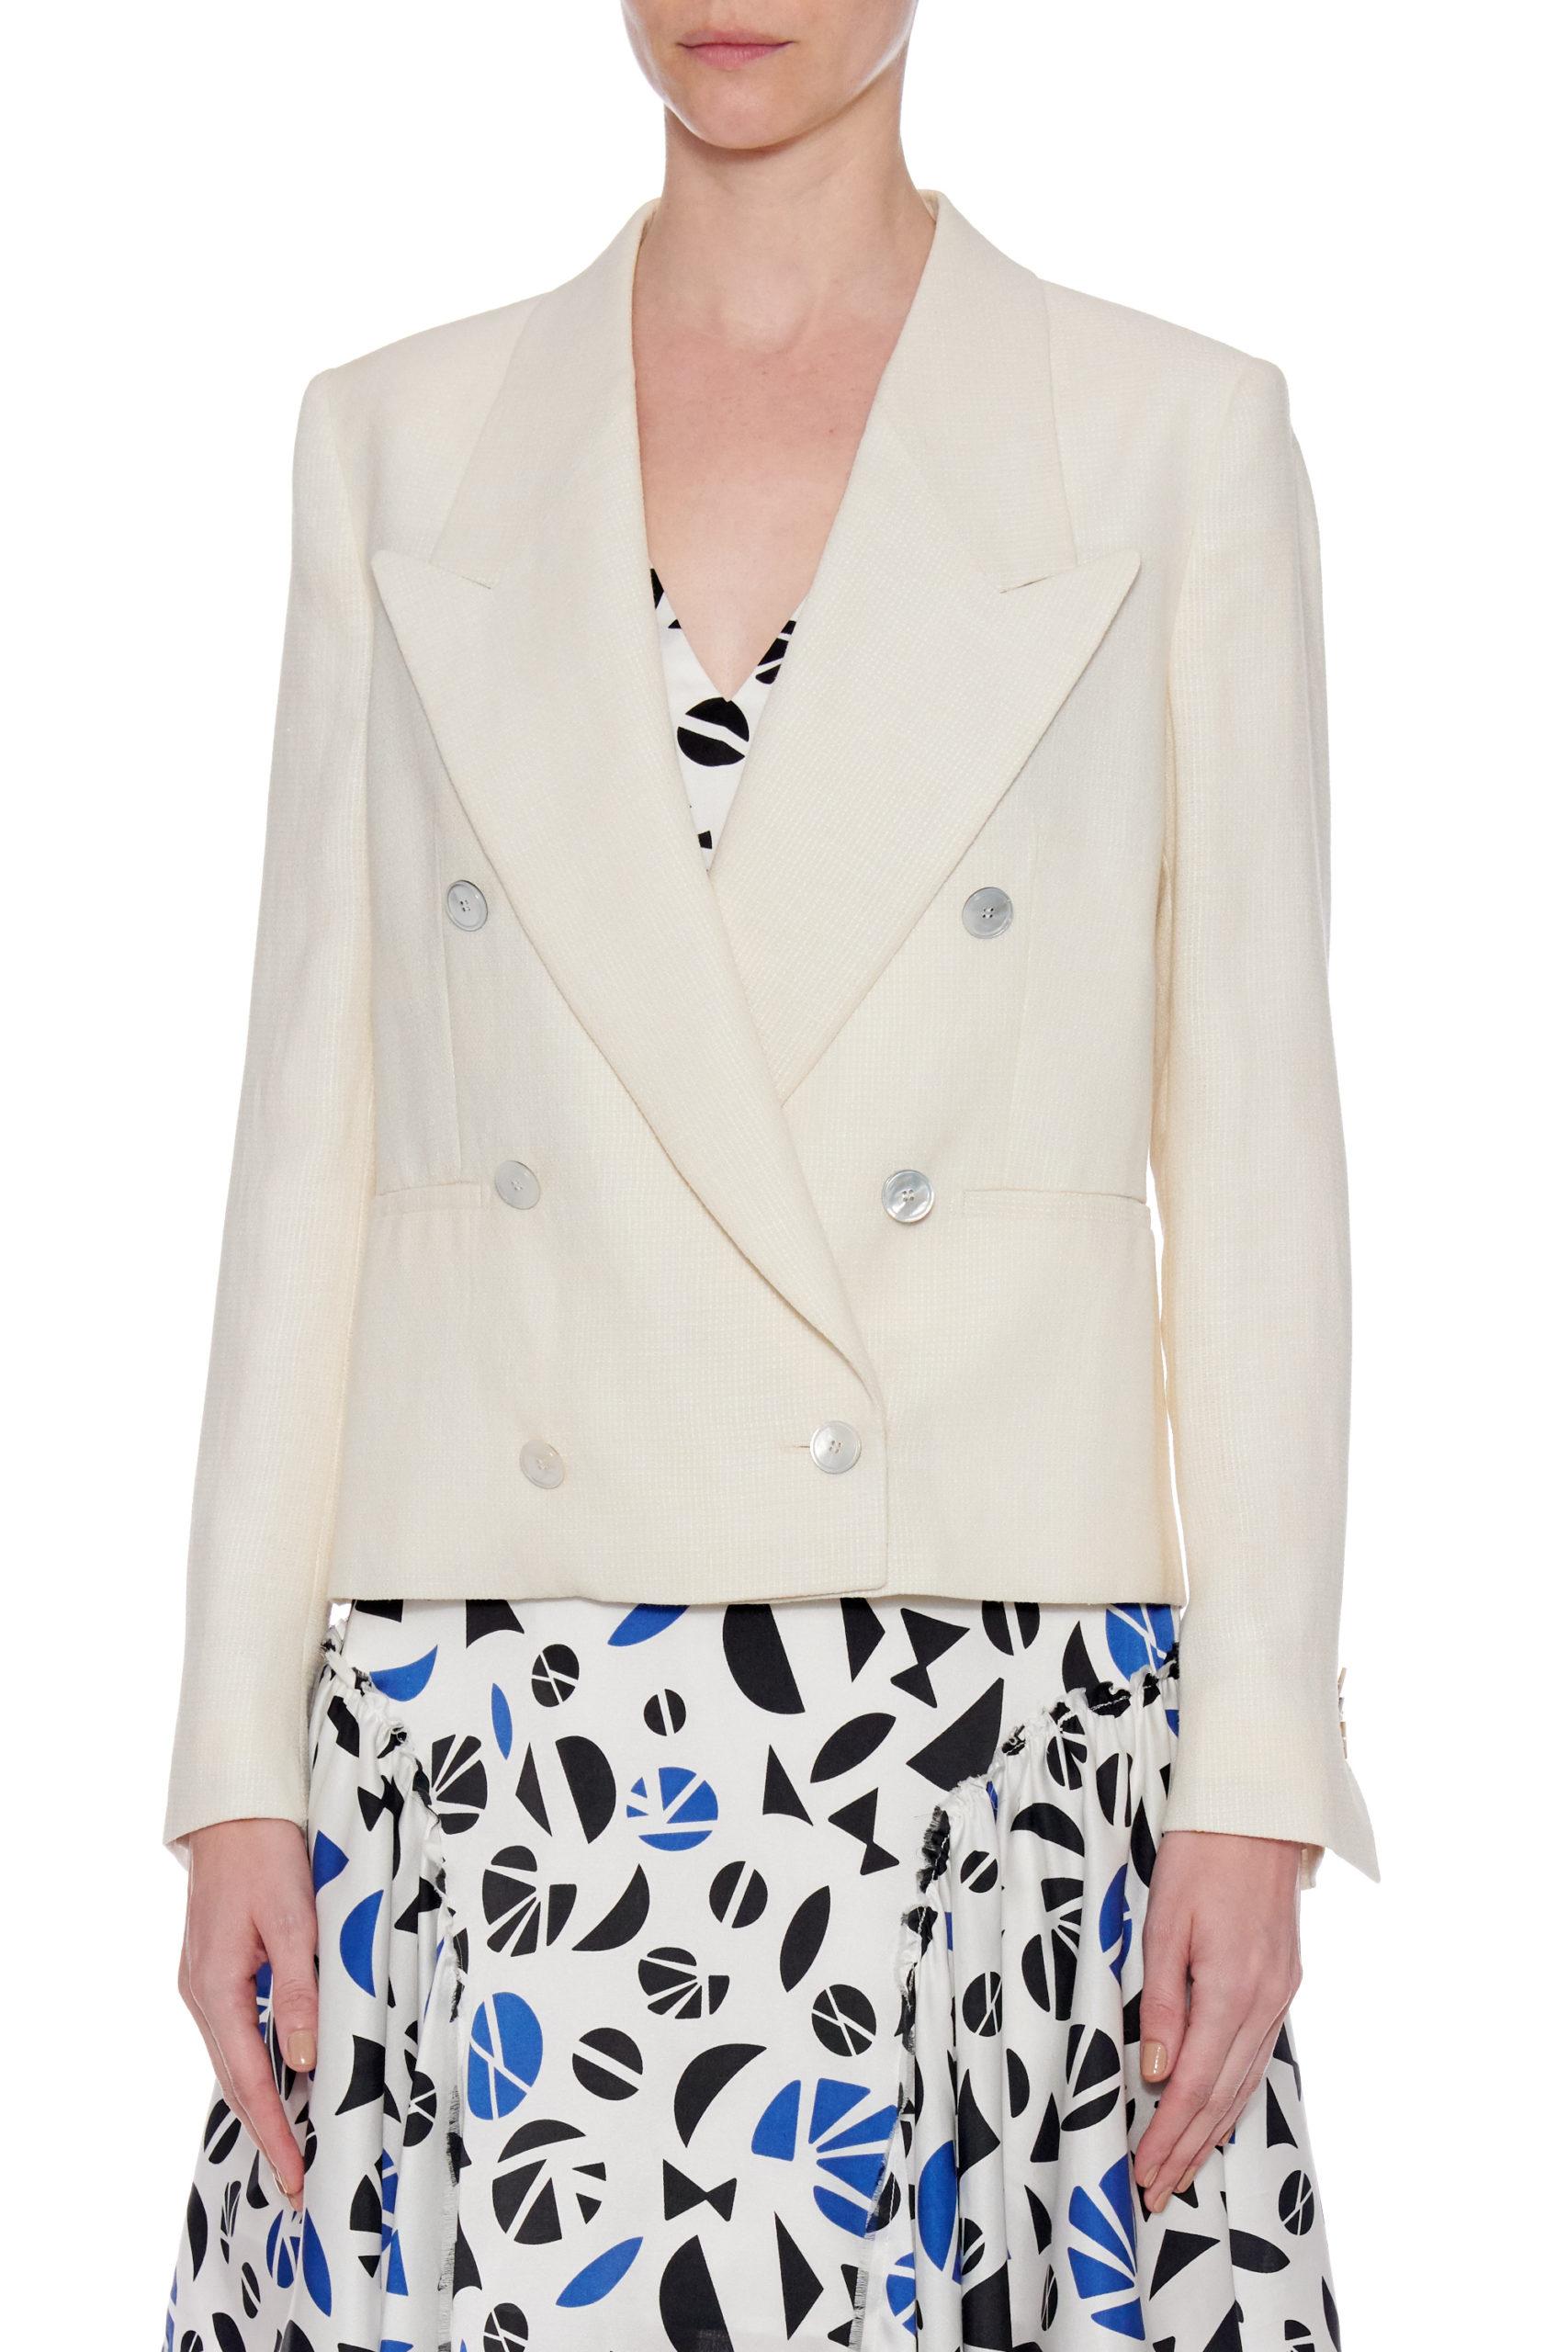 Oviedo Jacket – Peaked lapels, double breasted jacket in white